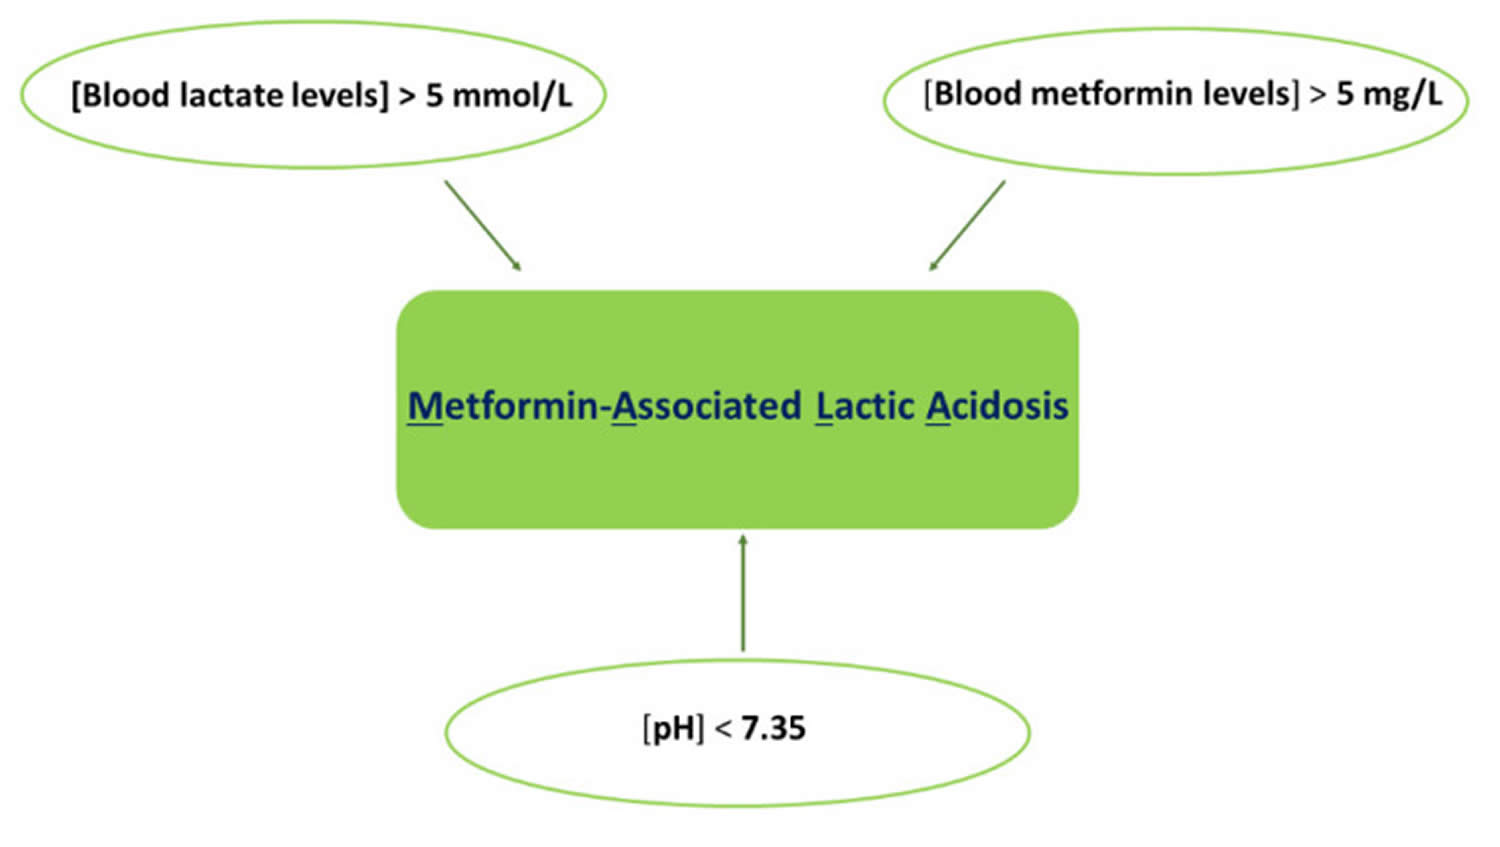 Metformin-associated lactic acidosis